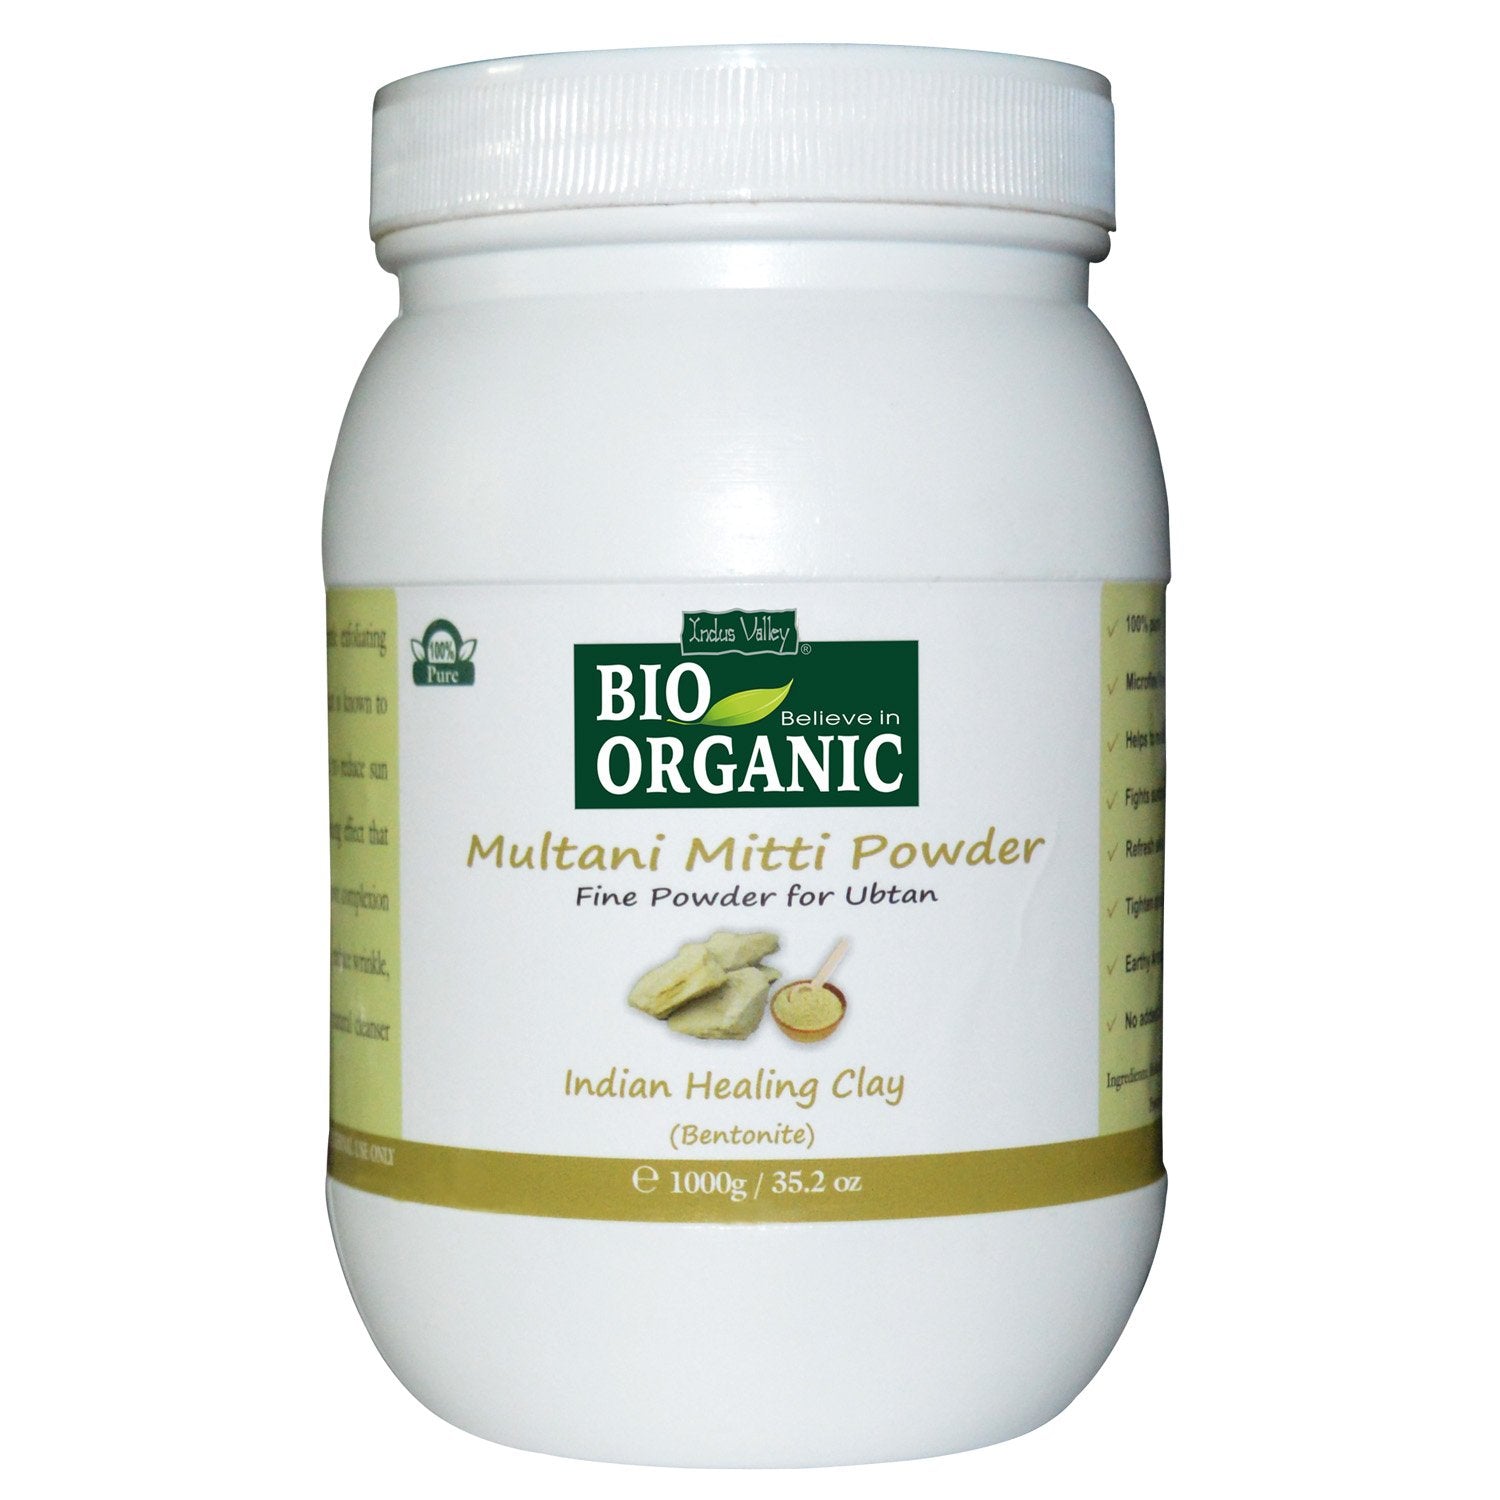 Bio-Organic Multani Mitti Powder